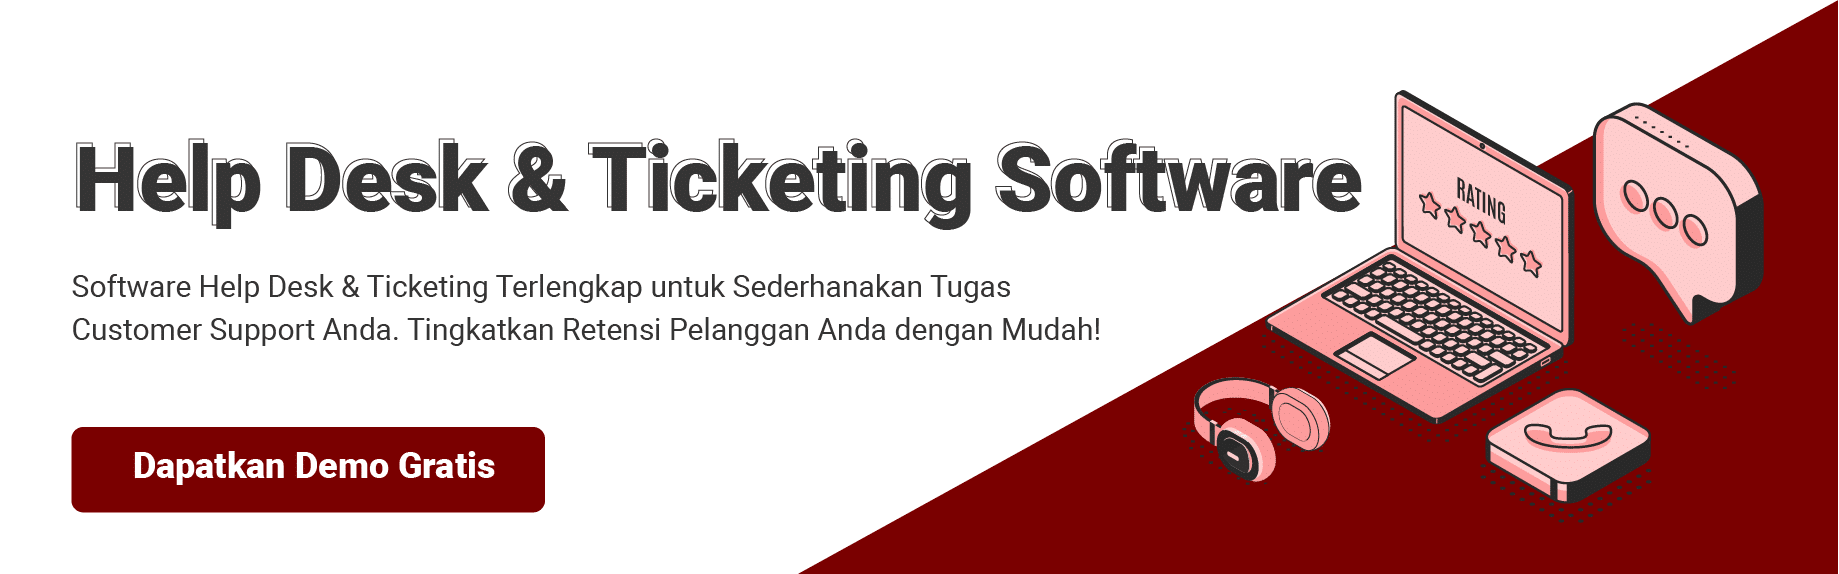 ticketing system